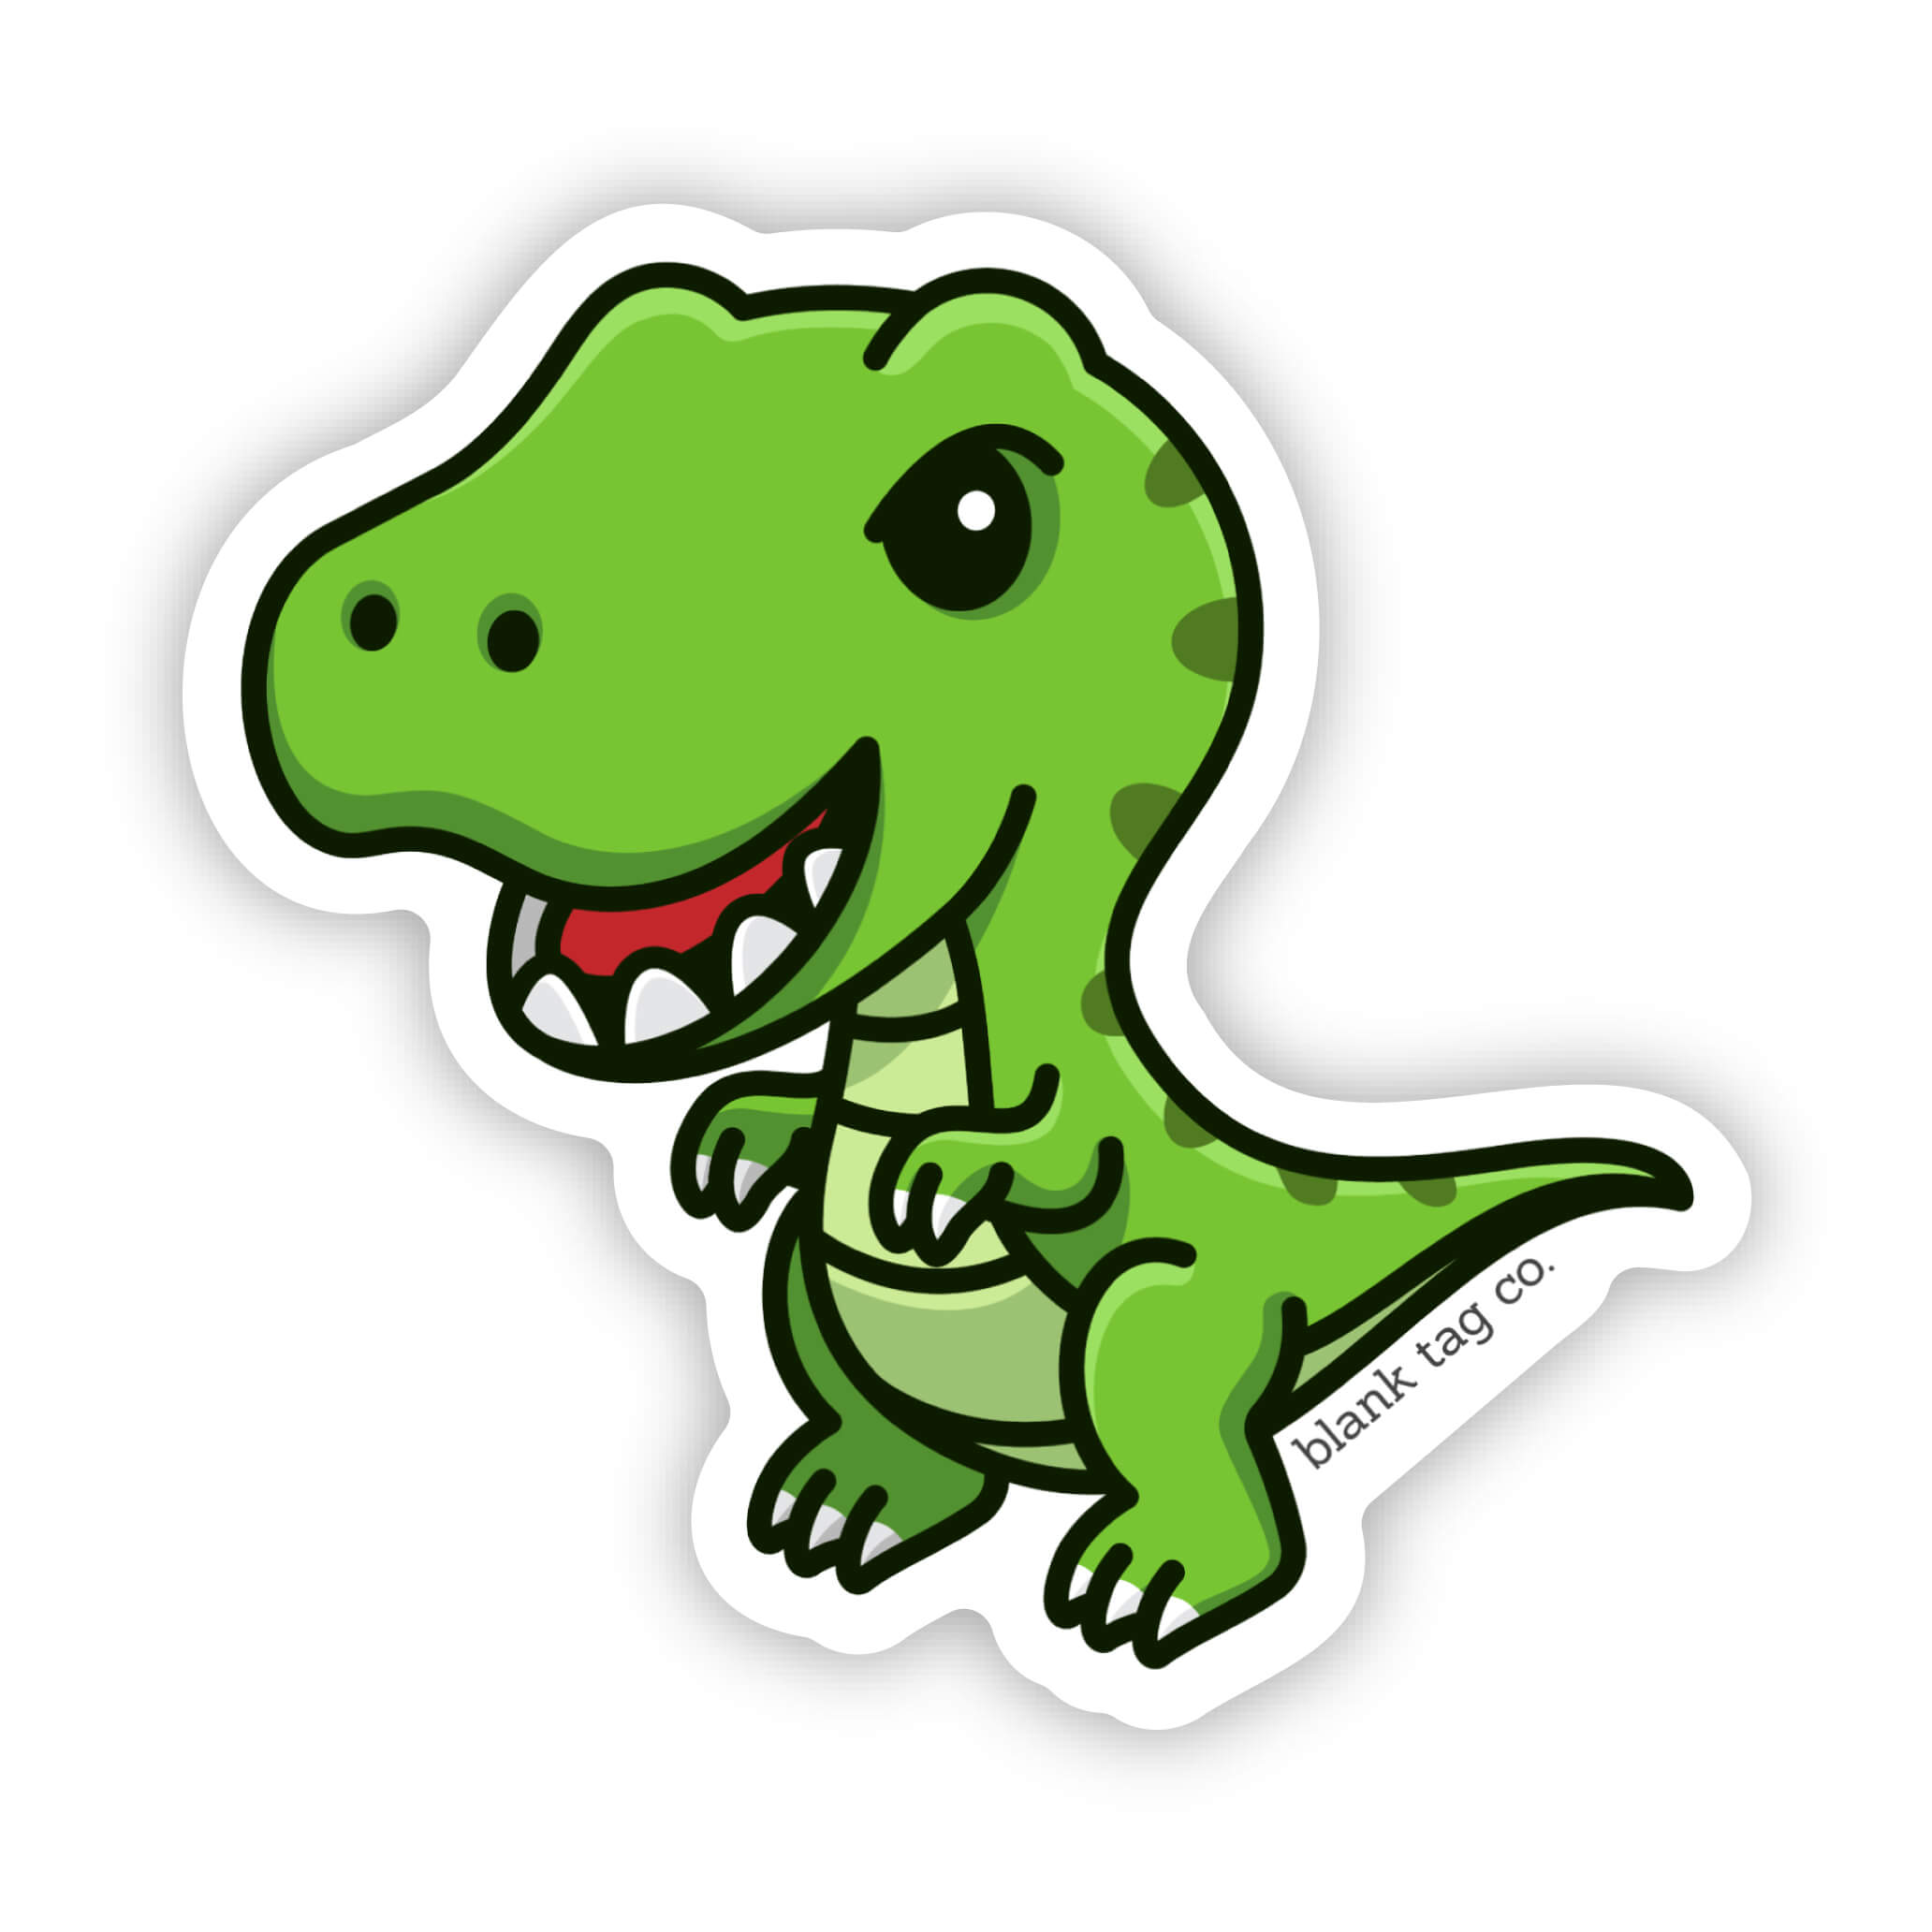 The Tyrannosaurus Rex Sticker